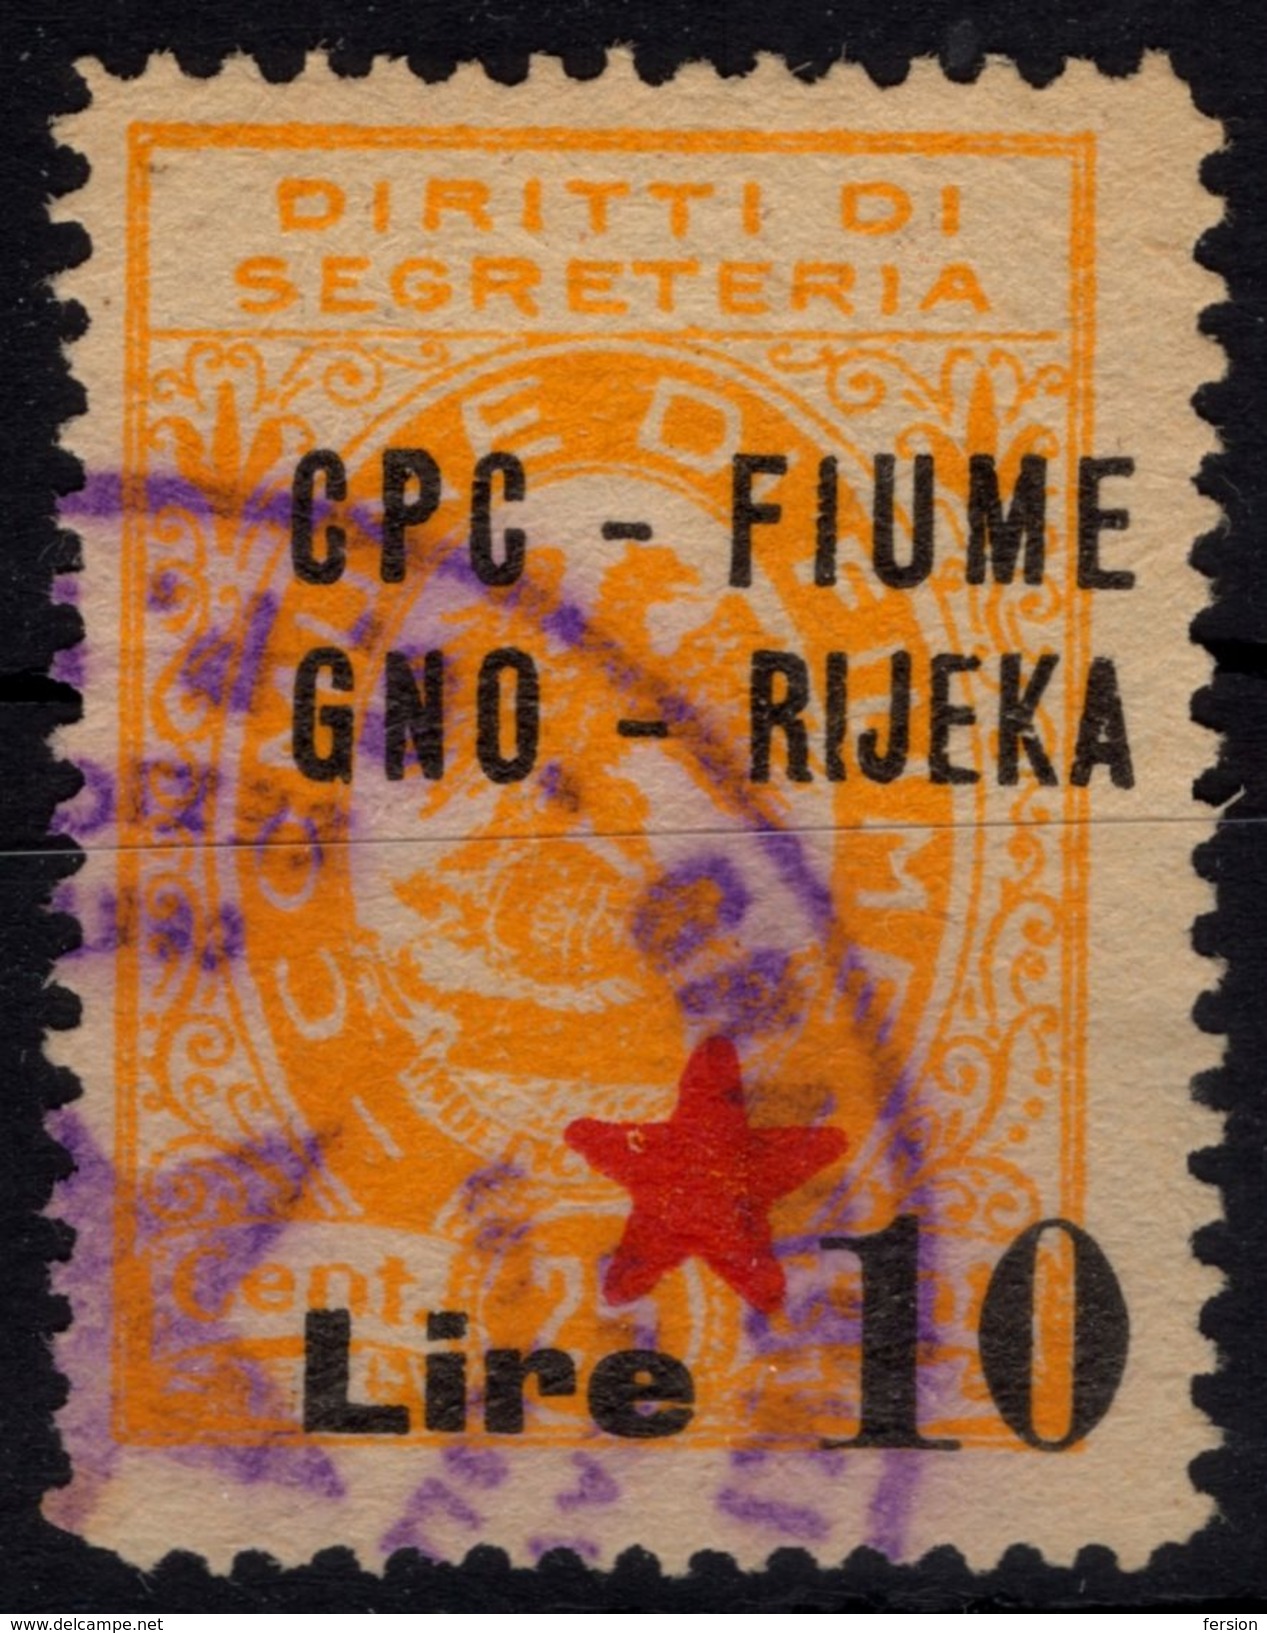 1945 - Istria Istra / Rijeka Fiume - Yugoslavia Occupation - Revenue Stamp - Overprint - Used CROATIA - Occ. Yougoslave: Fiume